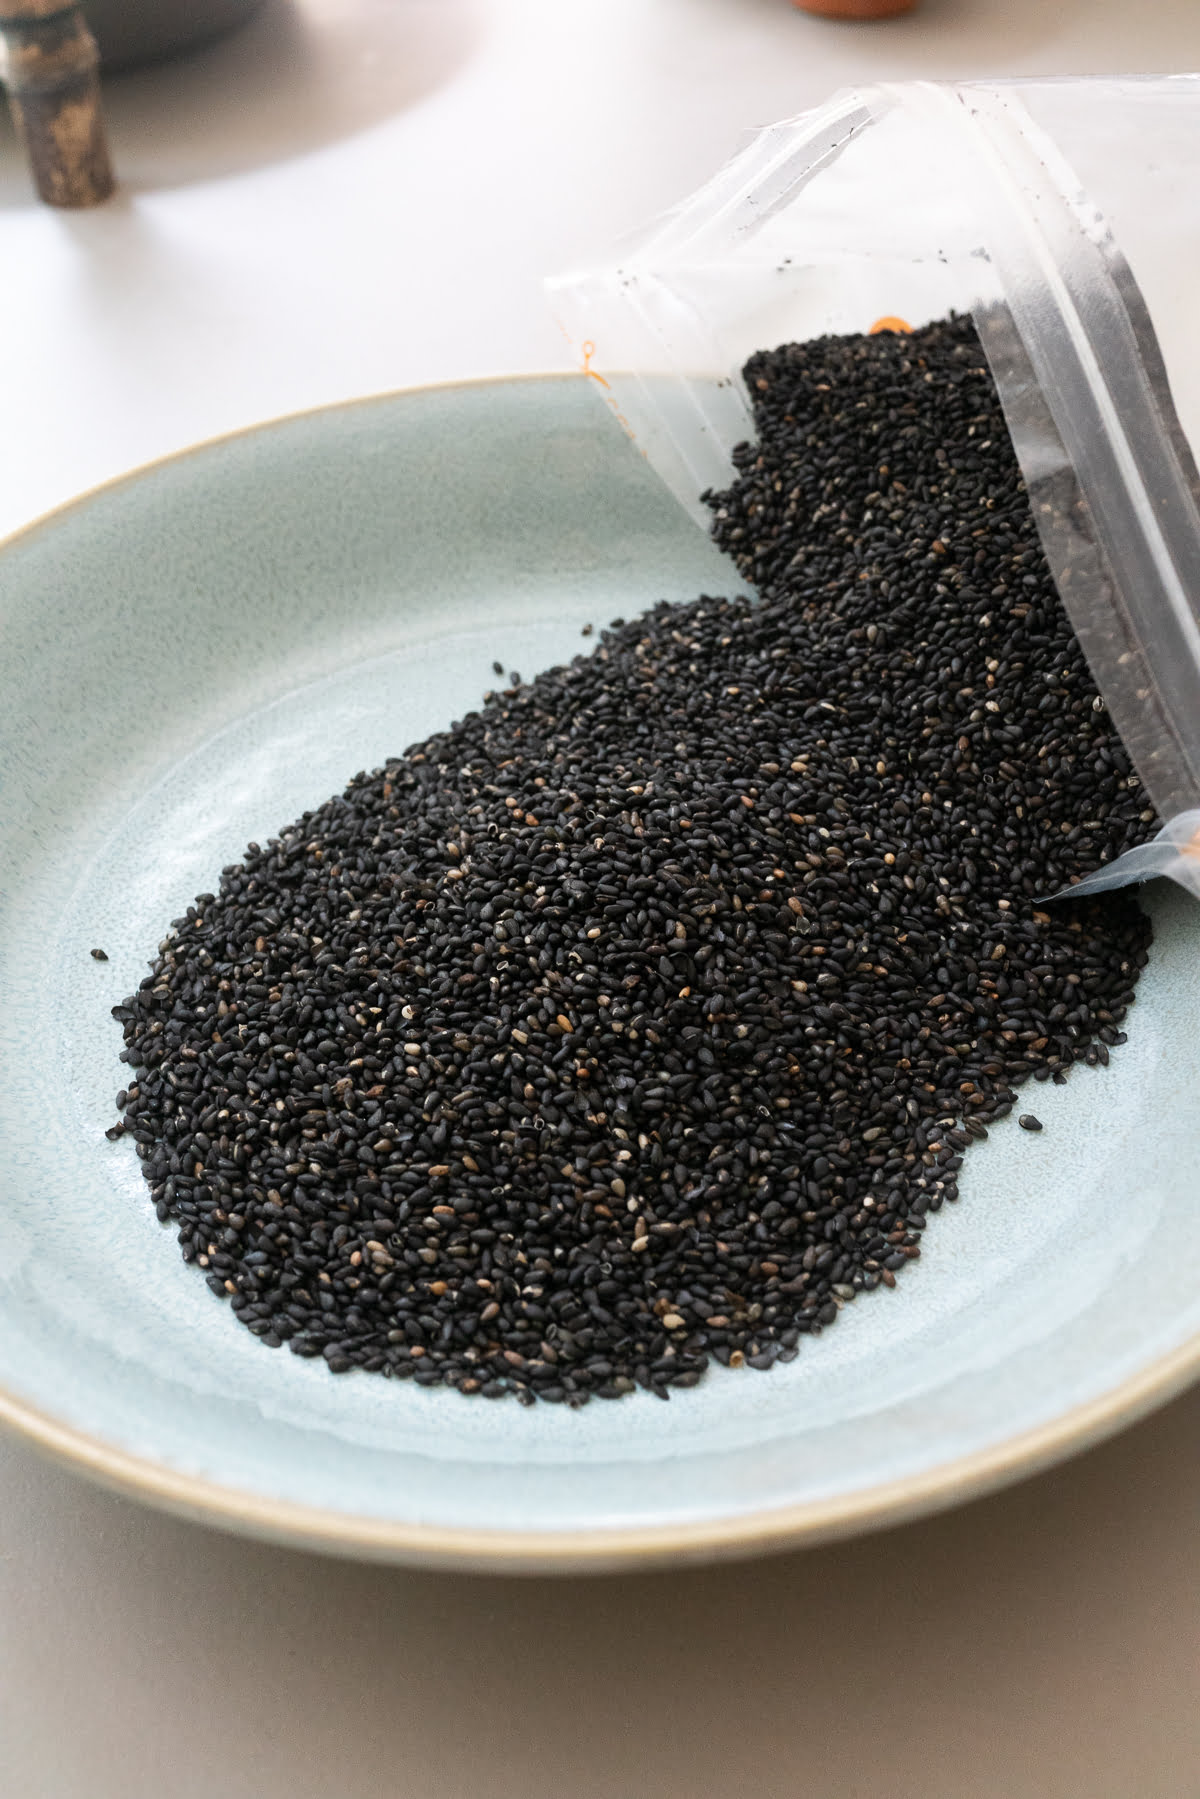 A dish of roasted black sesame seeds.